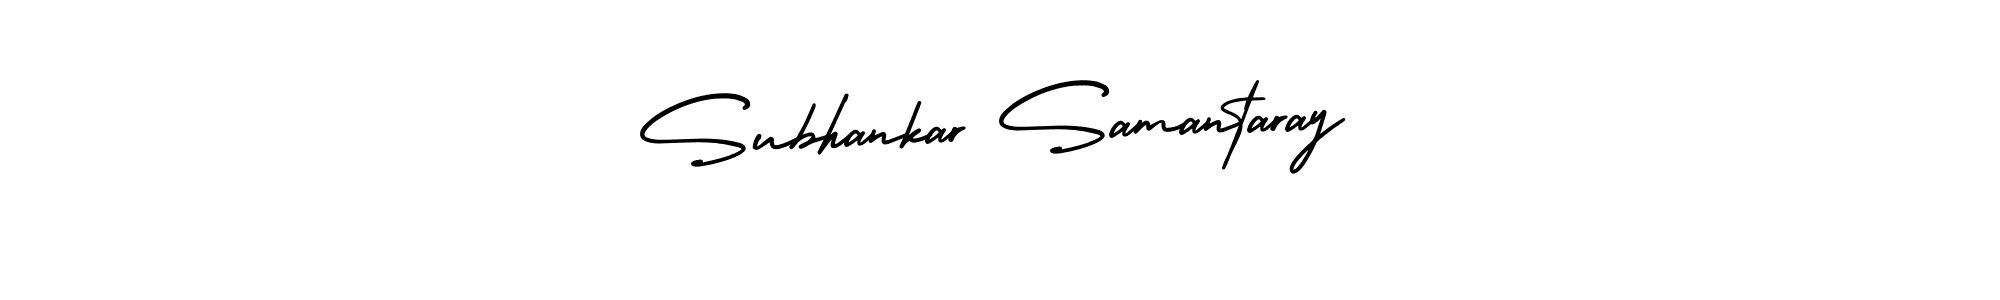 Best and Professional Signature Style for Subhankar Samantaray. AmerikaSignatureDemo-Regular Best Signature Style Collection. Subhankar Samantaray signature style 3 images and pictures png